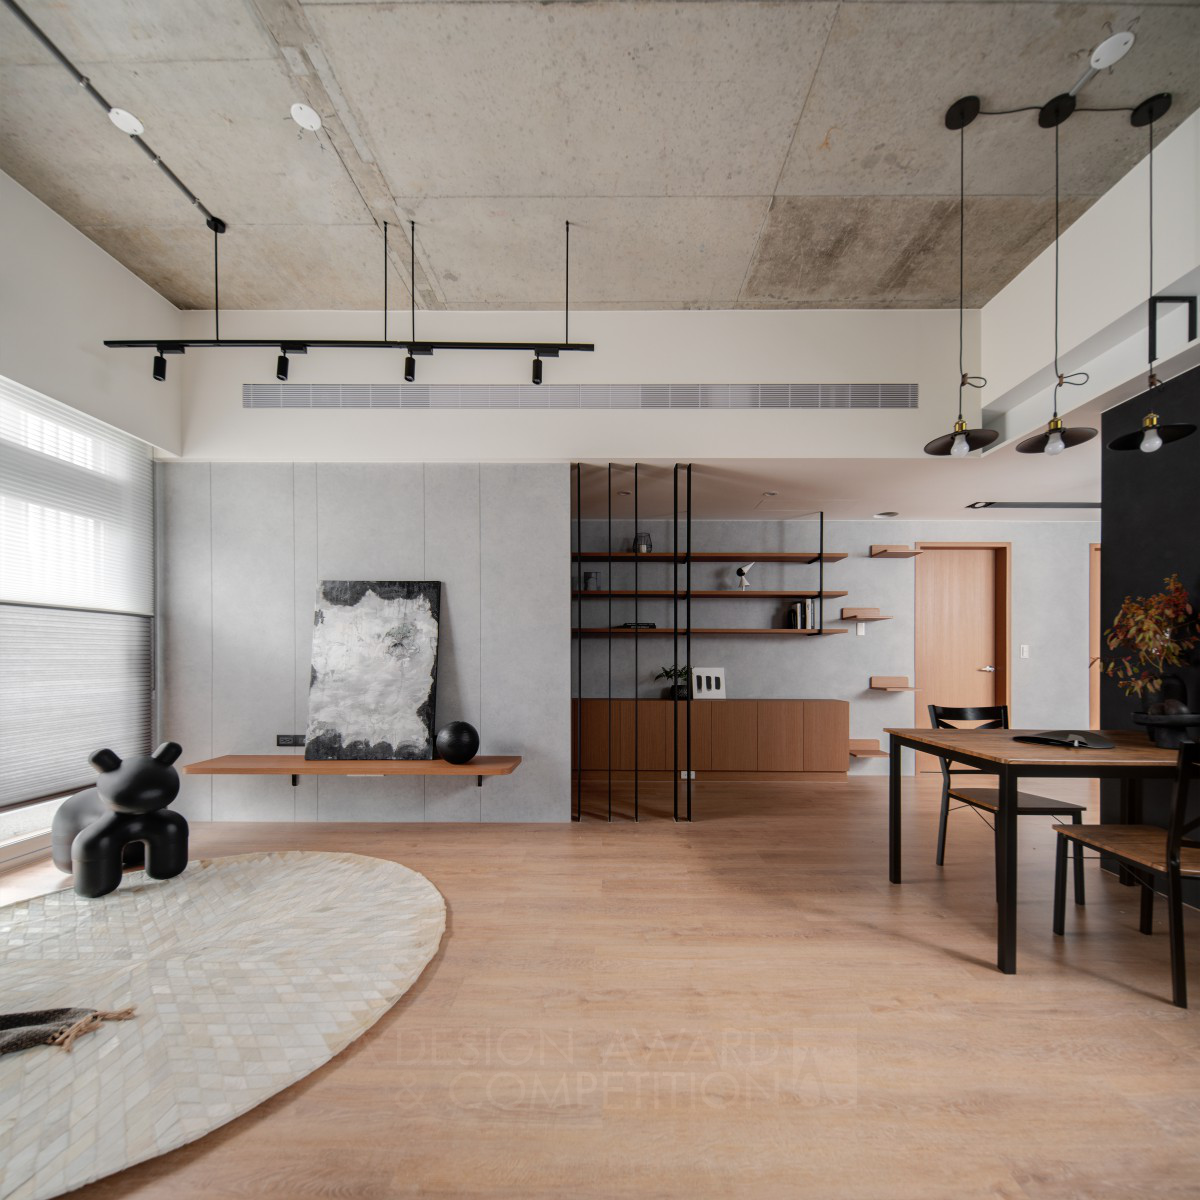 Yi-Lun Hsu wins Bronze at the prestigious A' Interior Space, Retail and Exhibition Design Award with Jazz Interior Design.